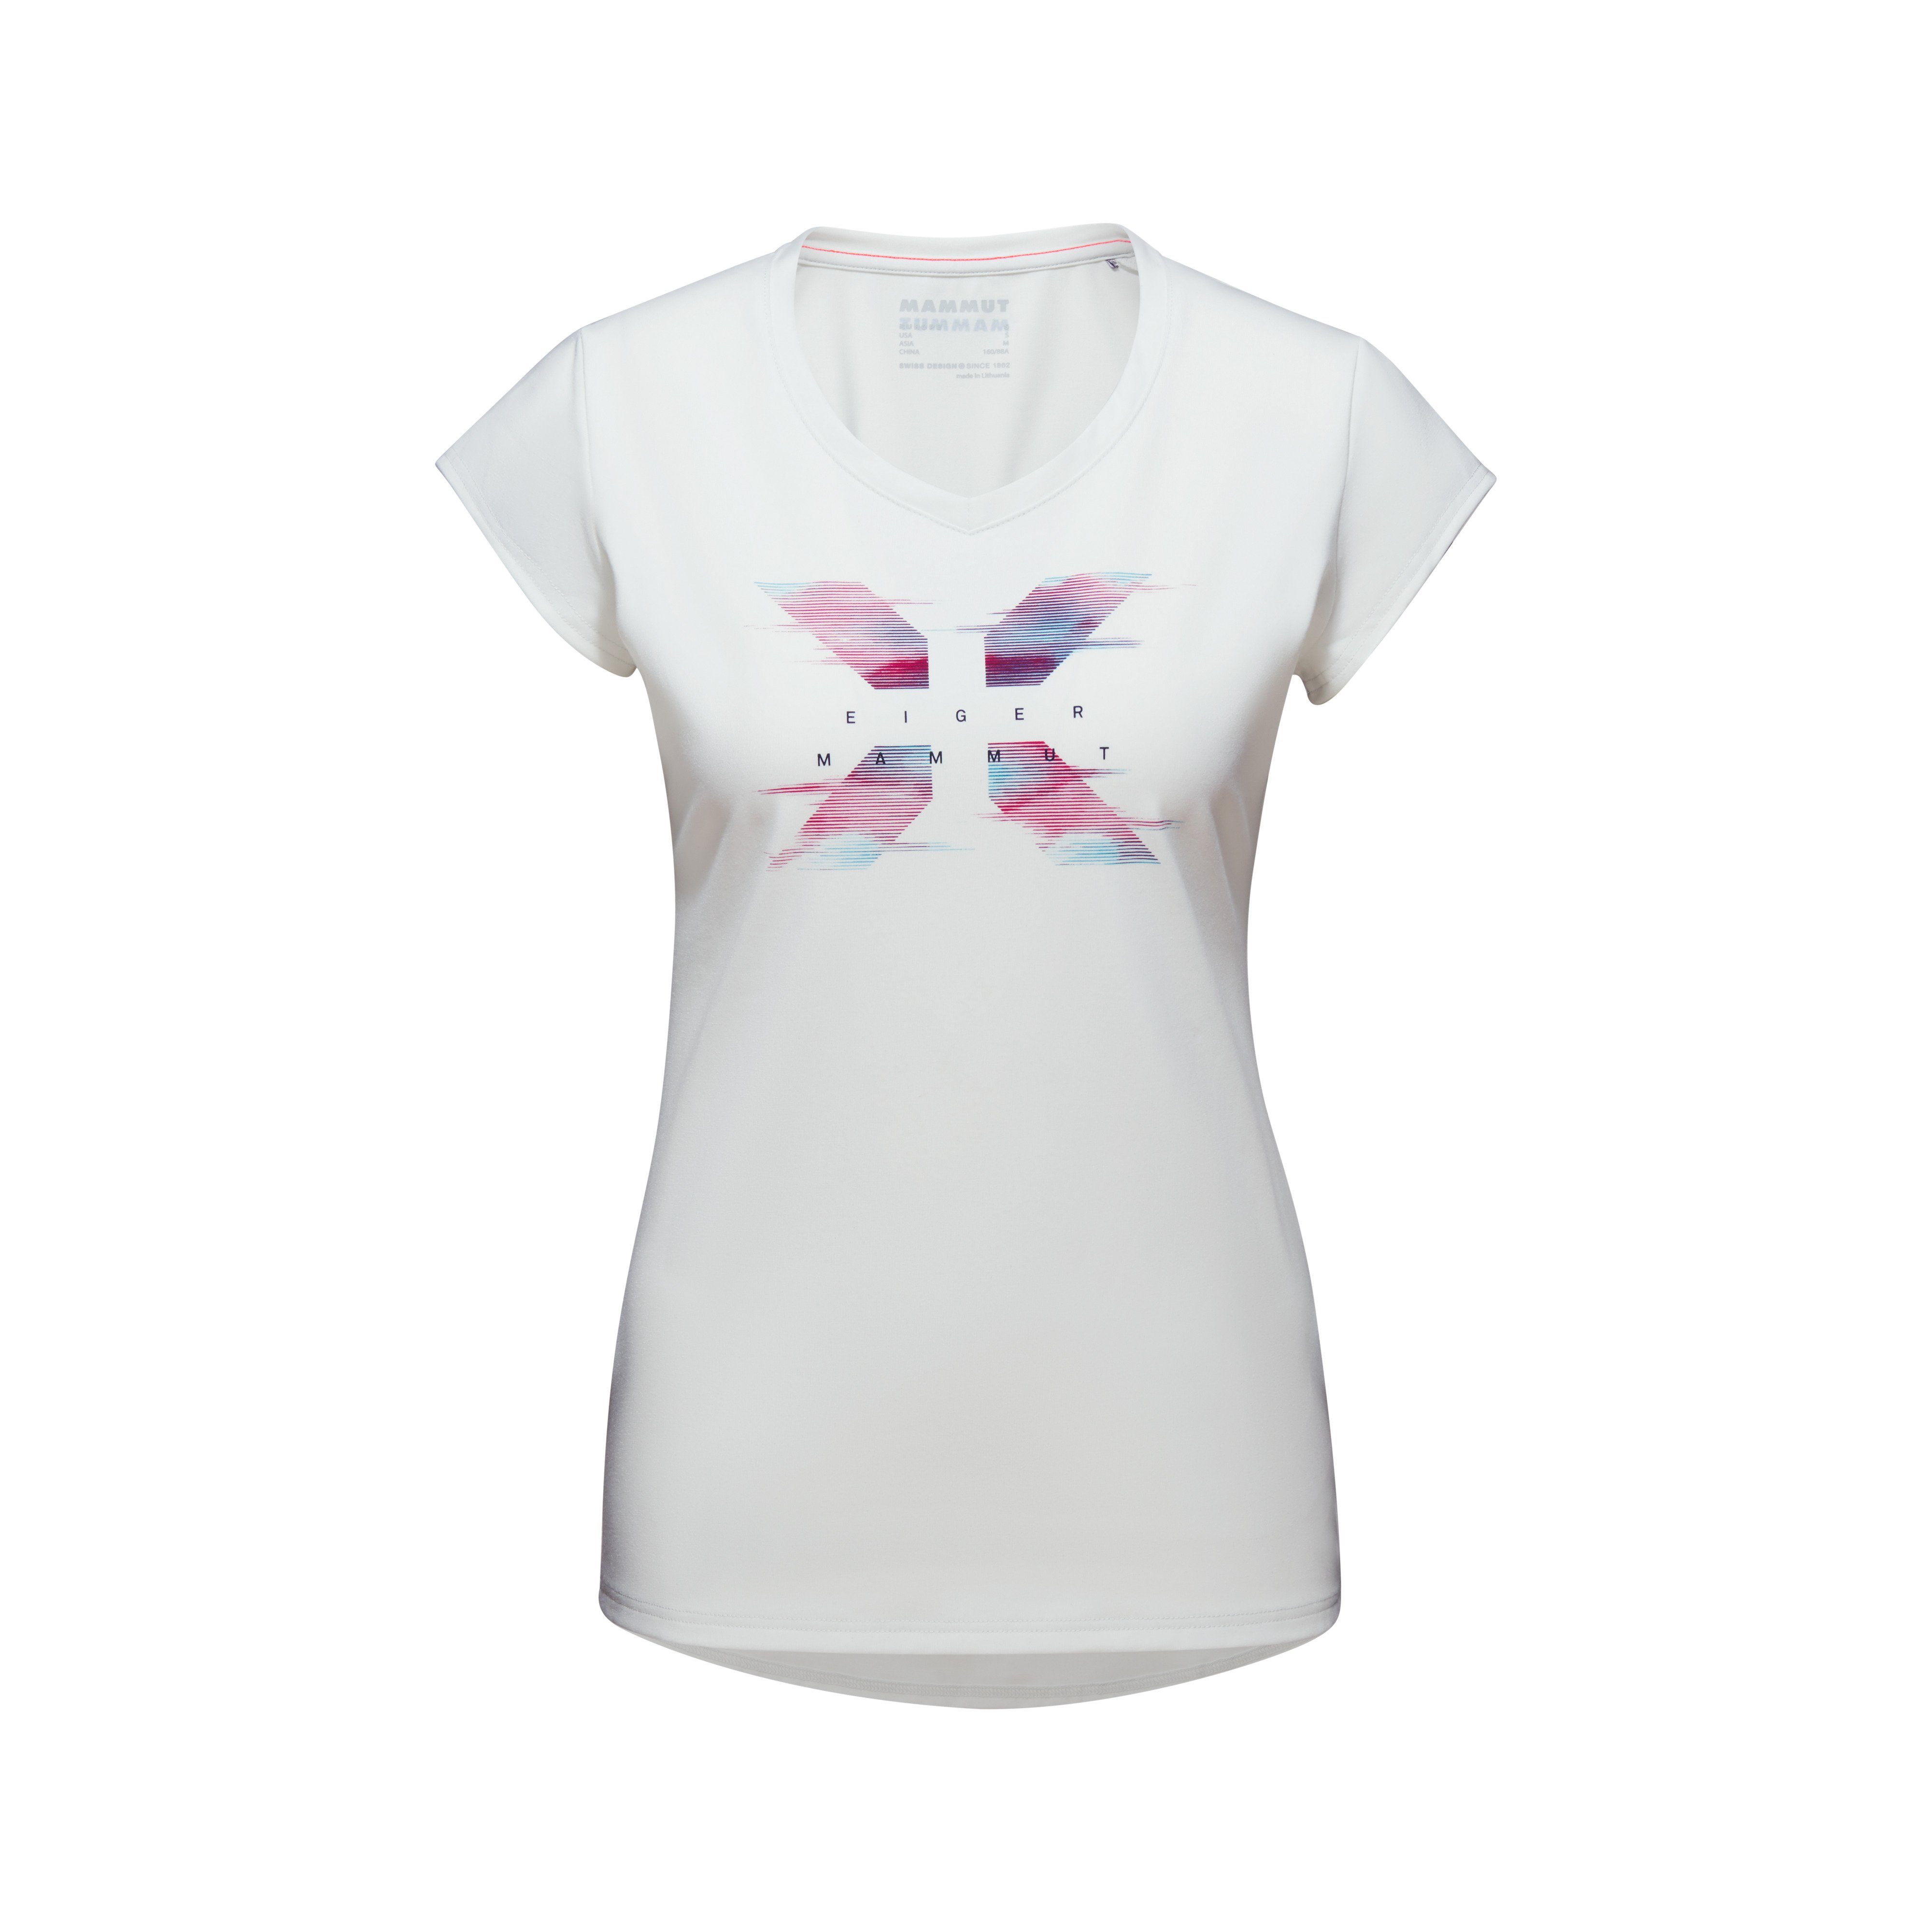 Trovat T-Shirt Women Light Fader - off white, XS product image